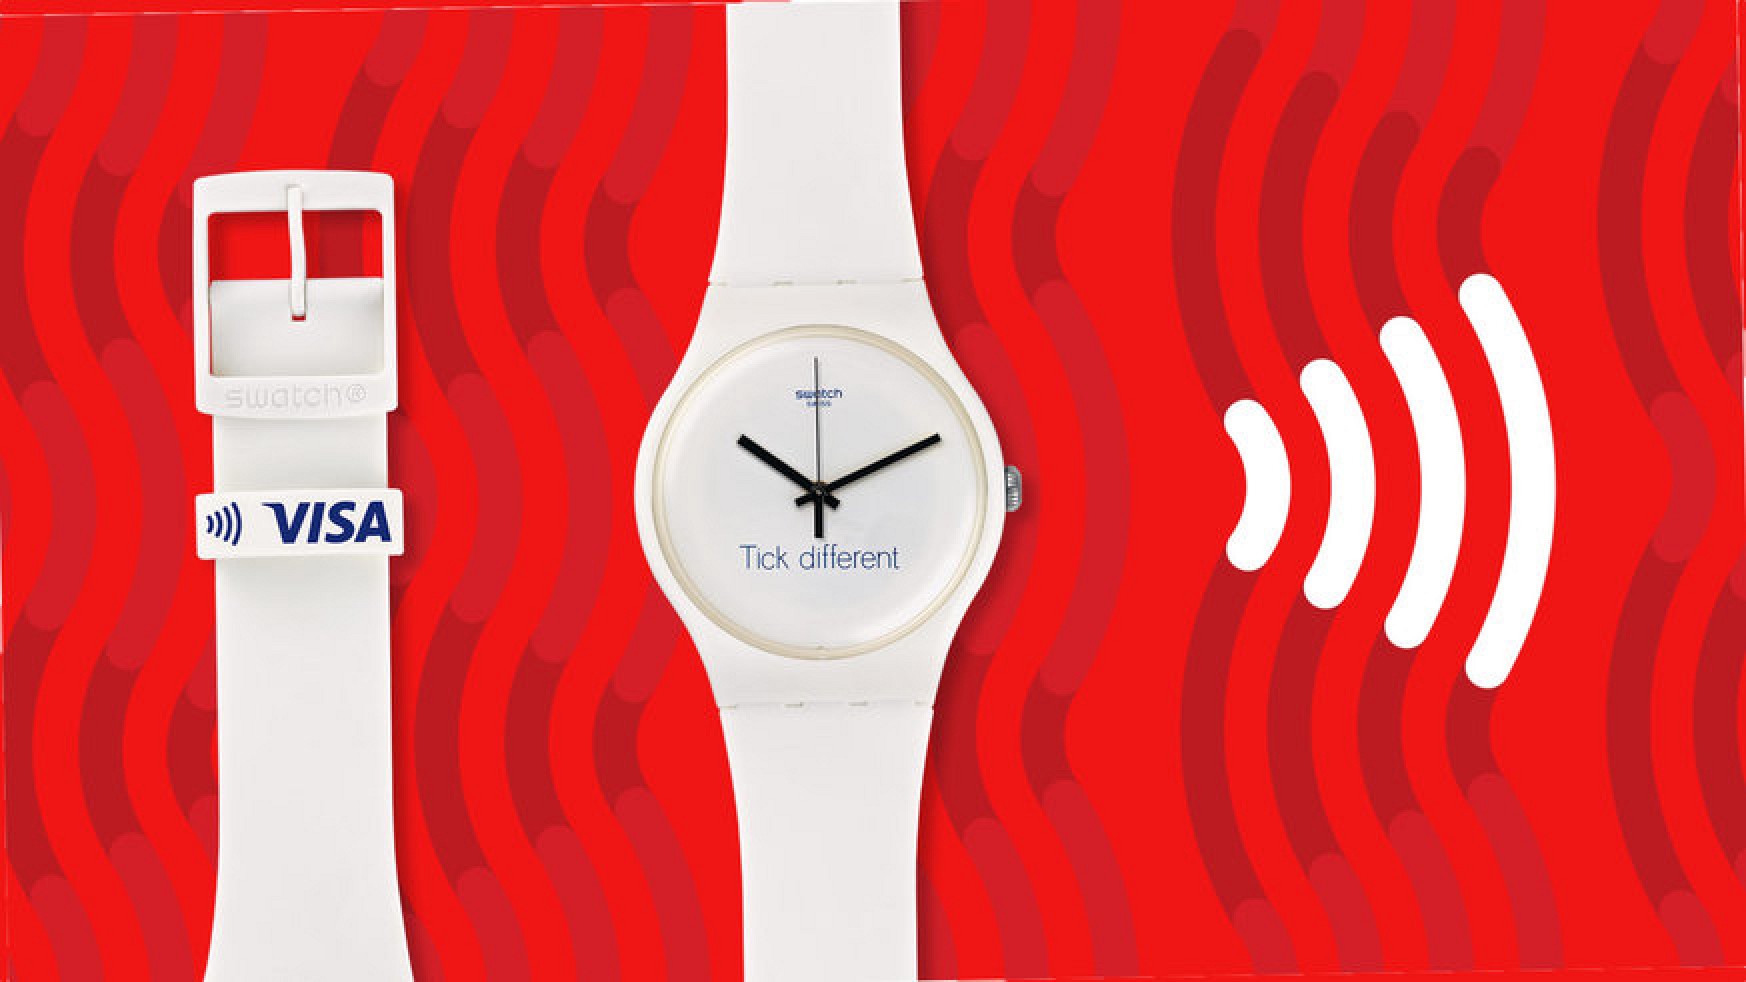 Swiss Court respalda a Swatch en la fila de marcas 'Tick Different' con Apple